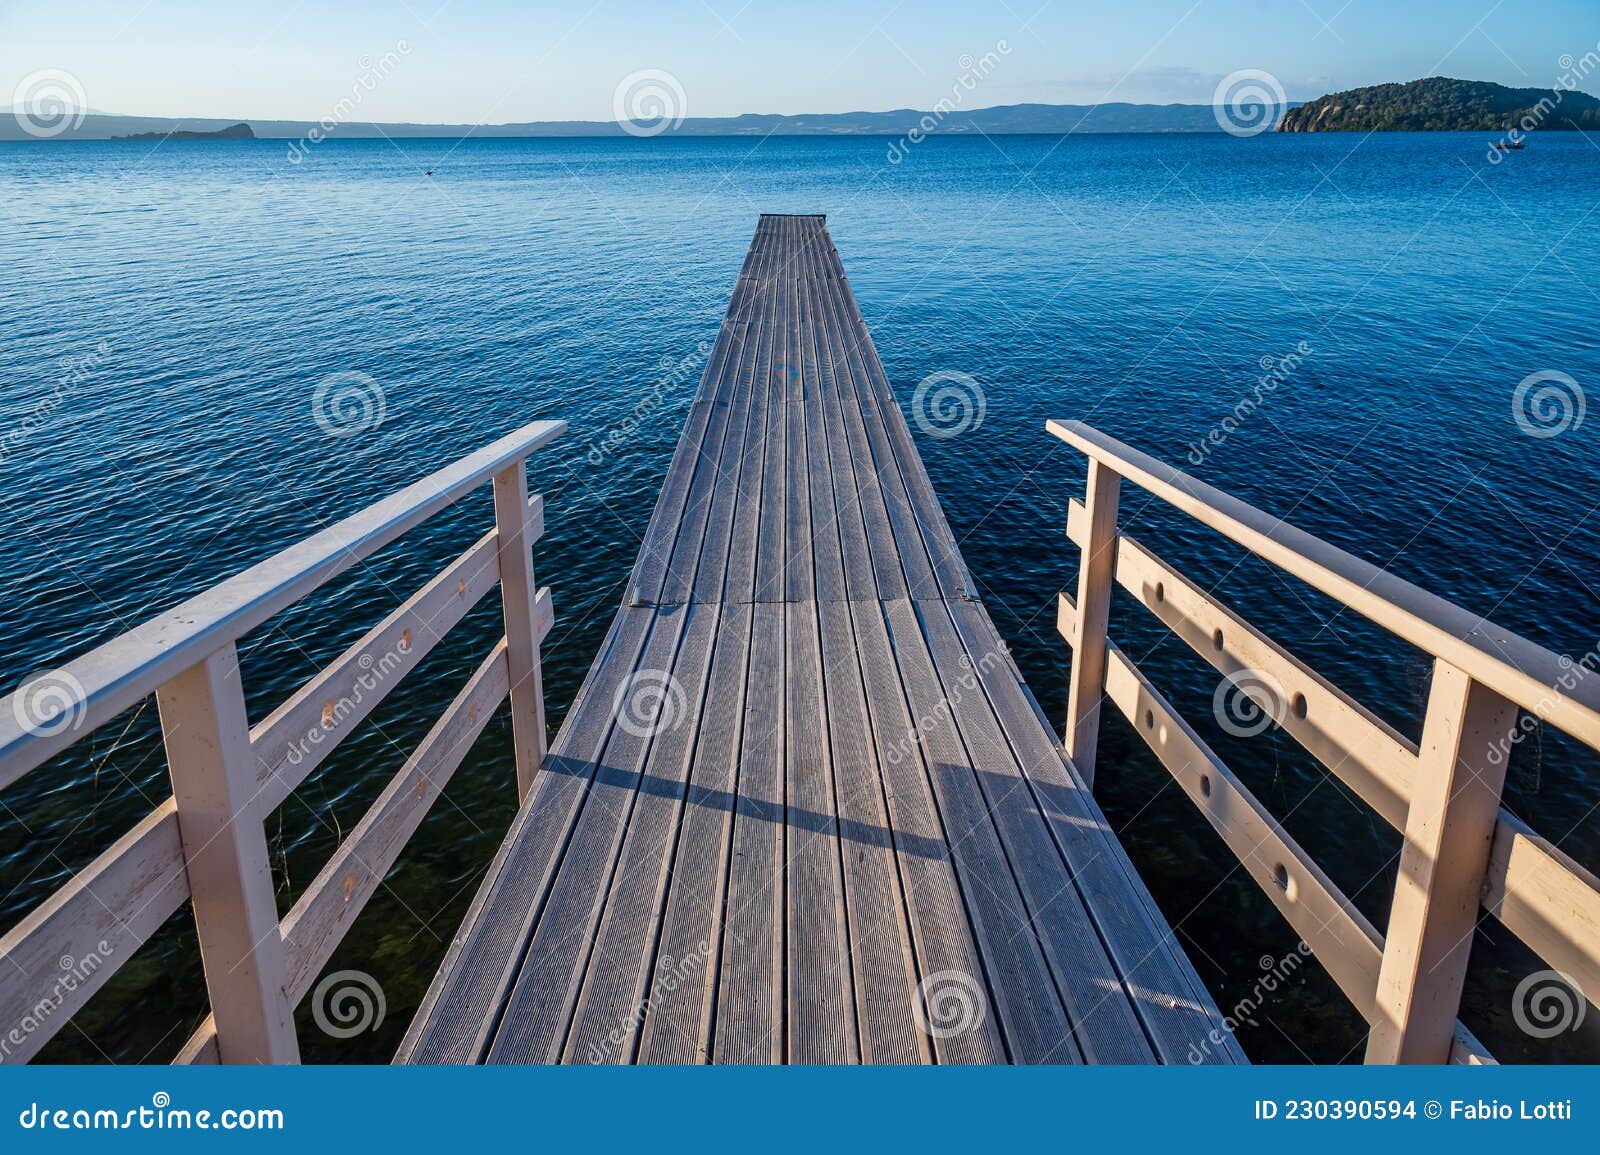 wooden pier on the bolsena lake near marta